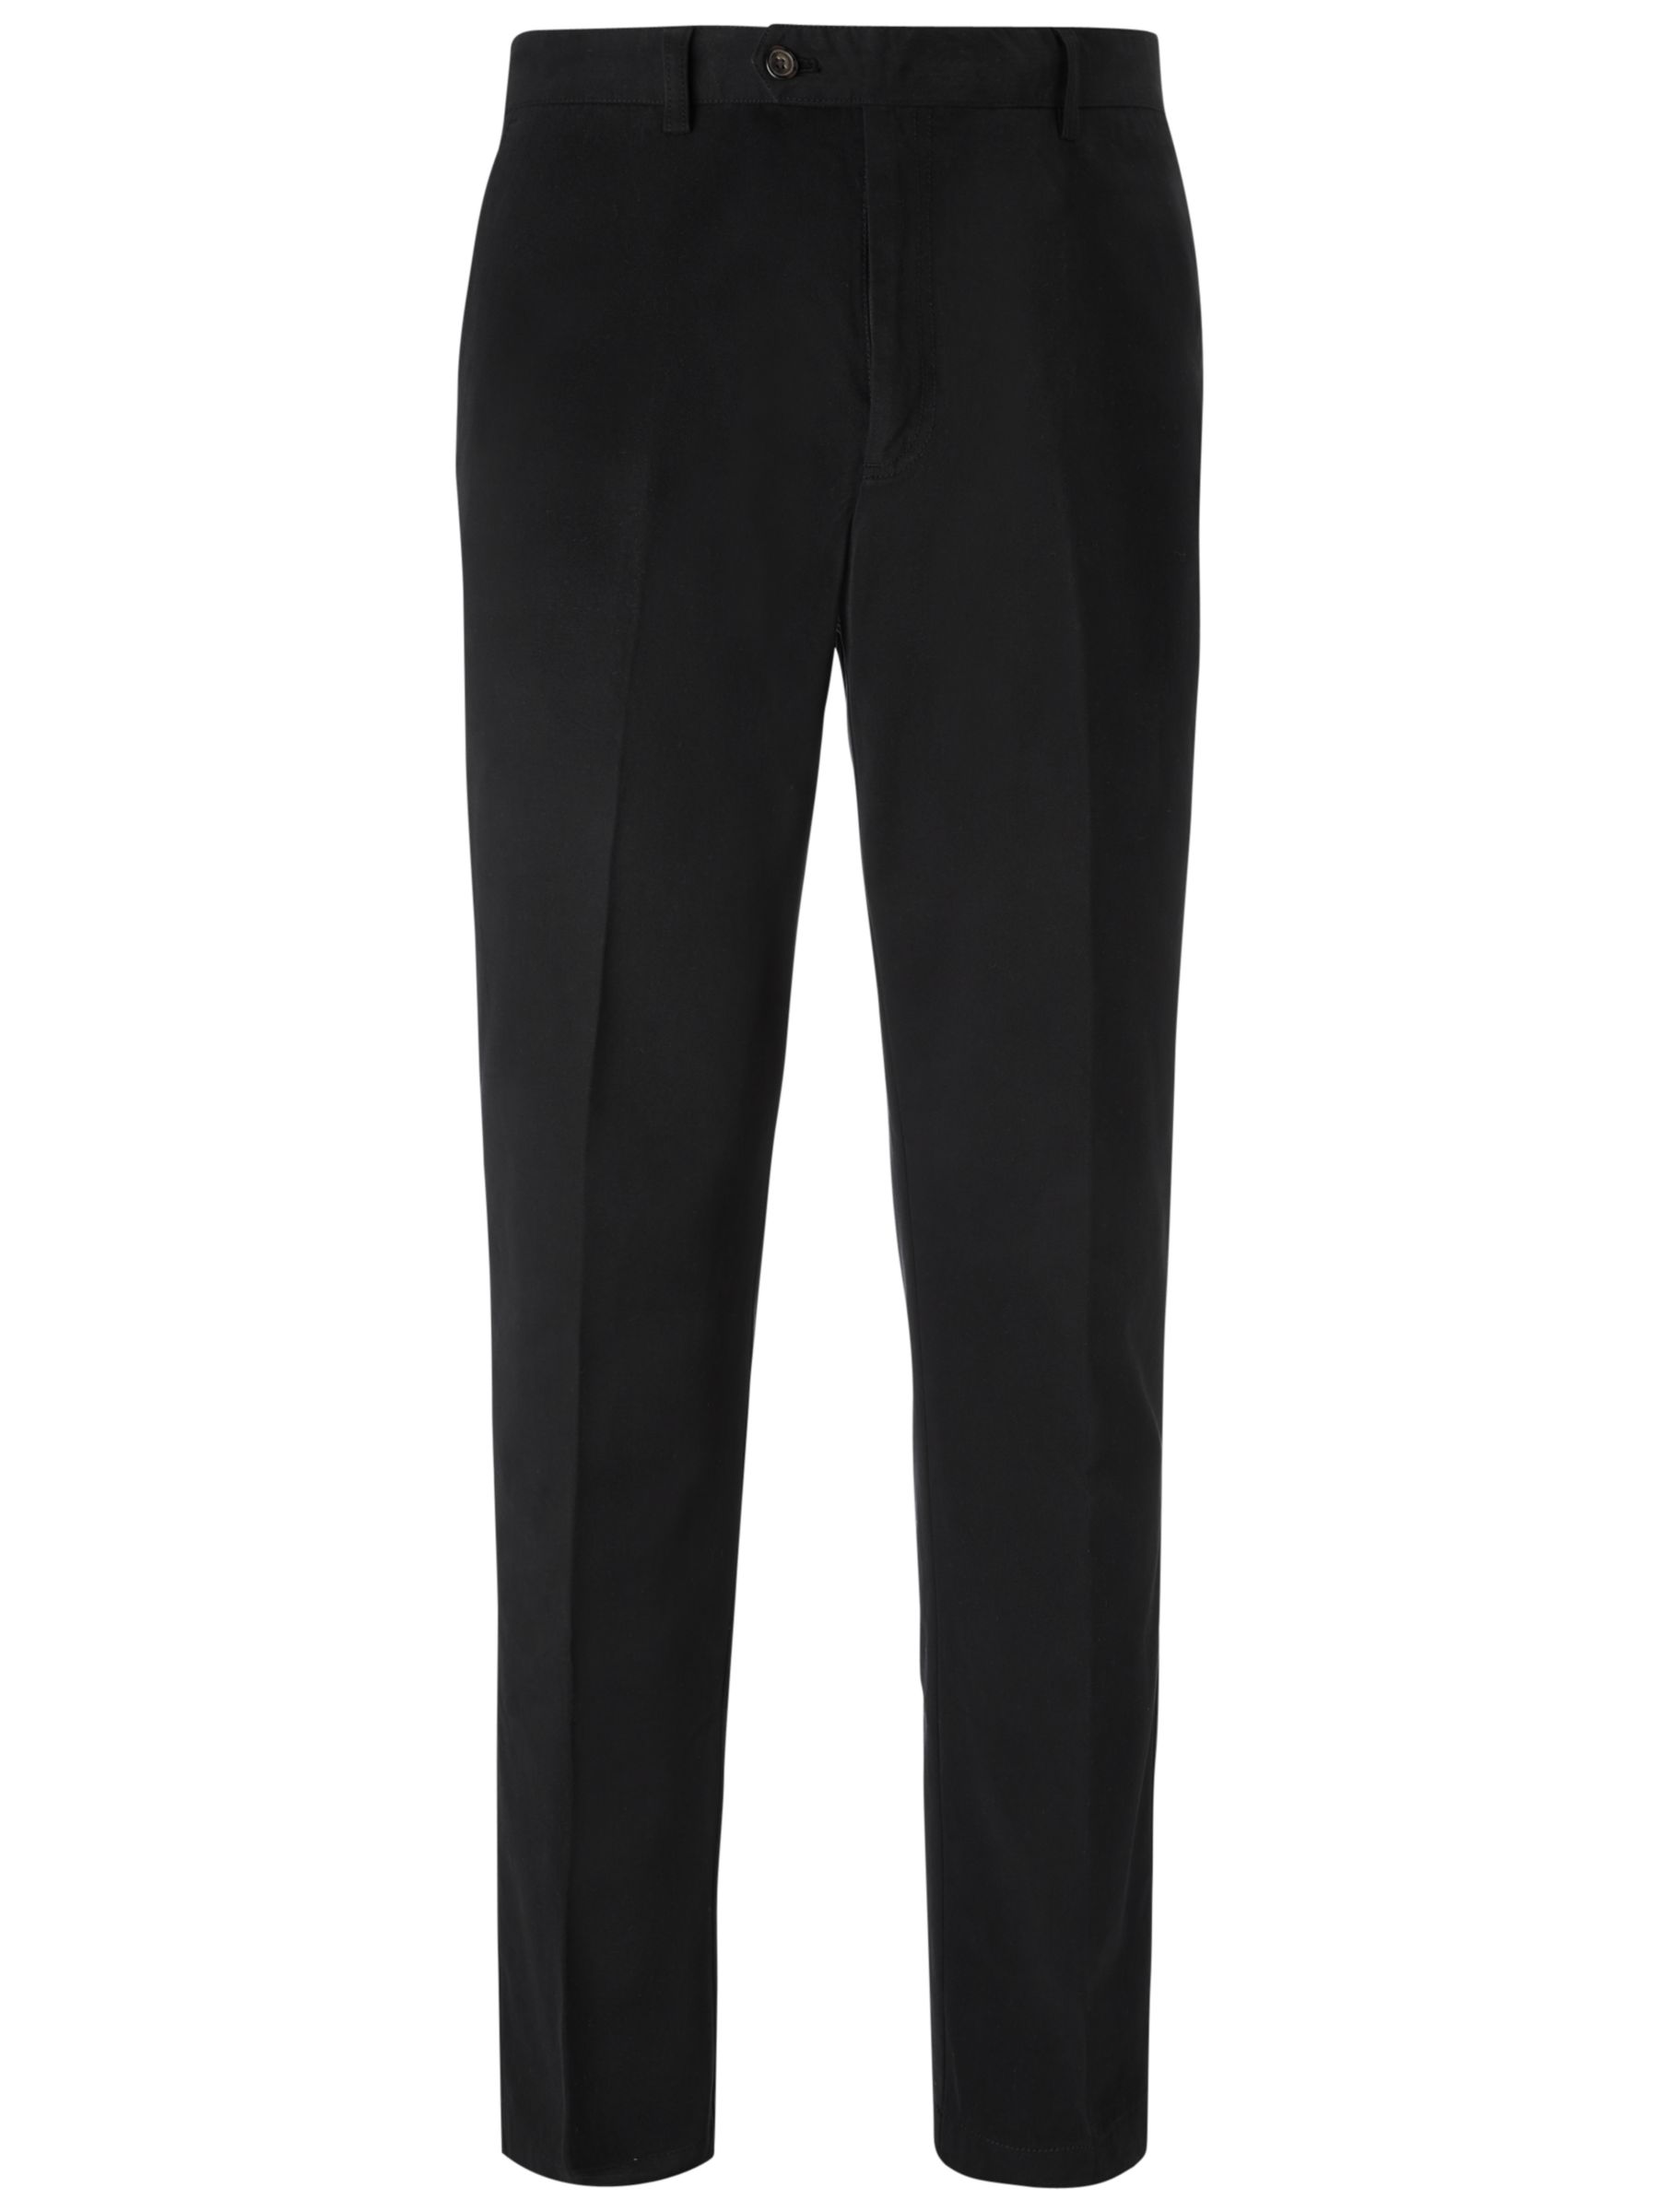 John Lewis & Partners Wrinkle Free Flat Front Trousers, Black, 38L